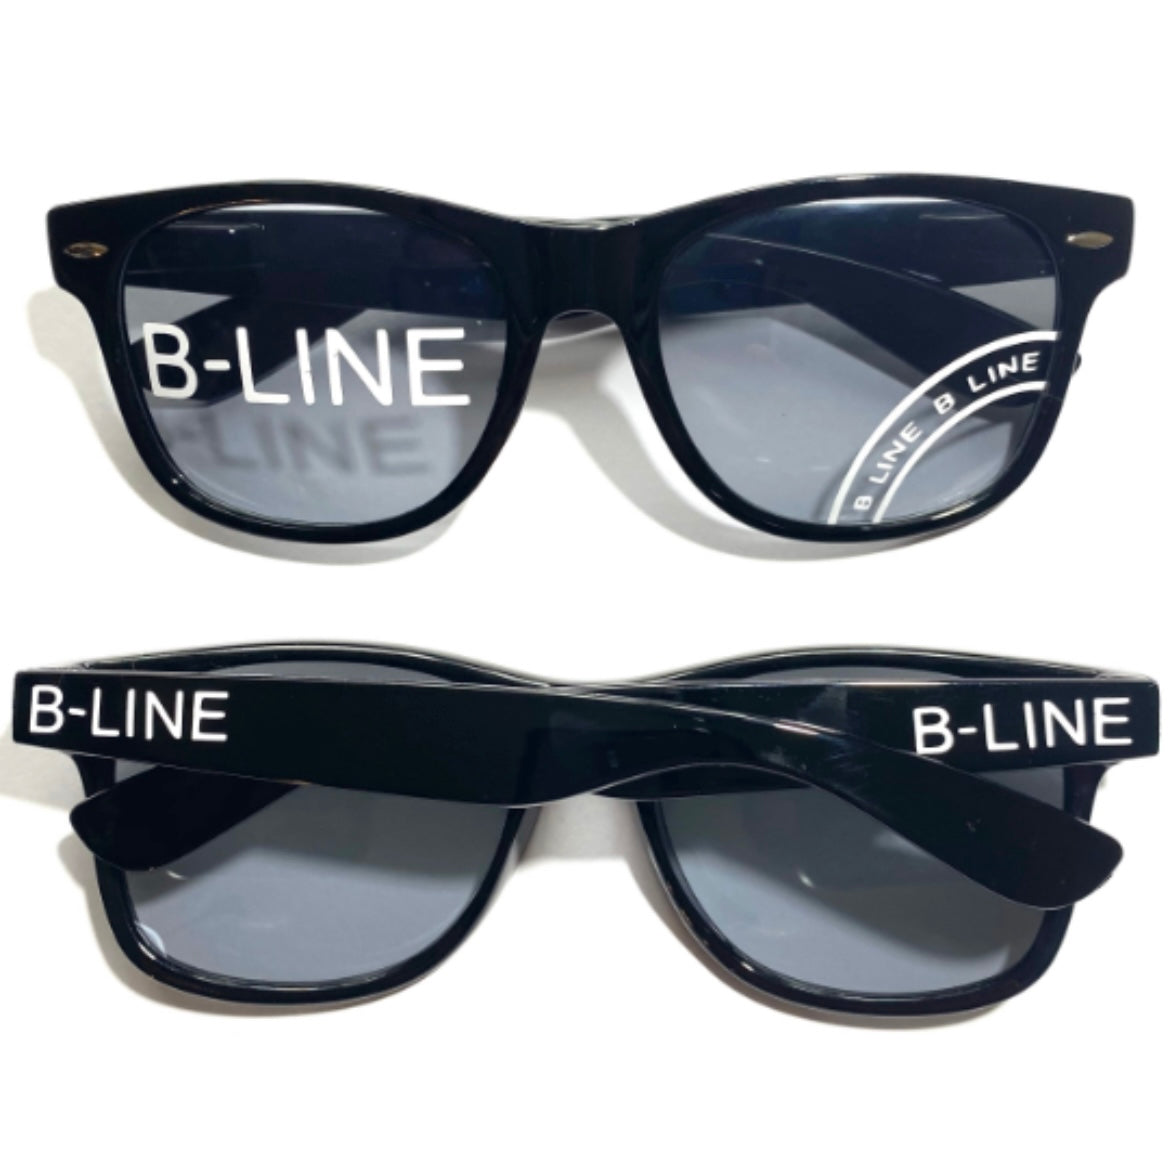 B-Line Sunglasses